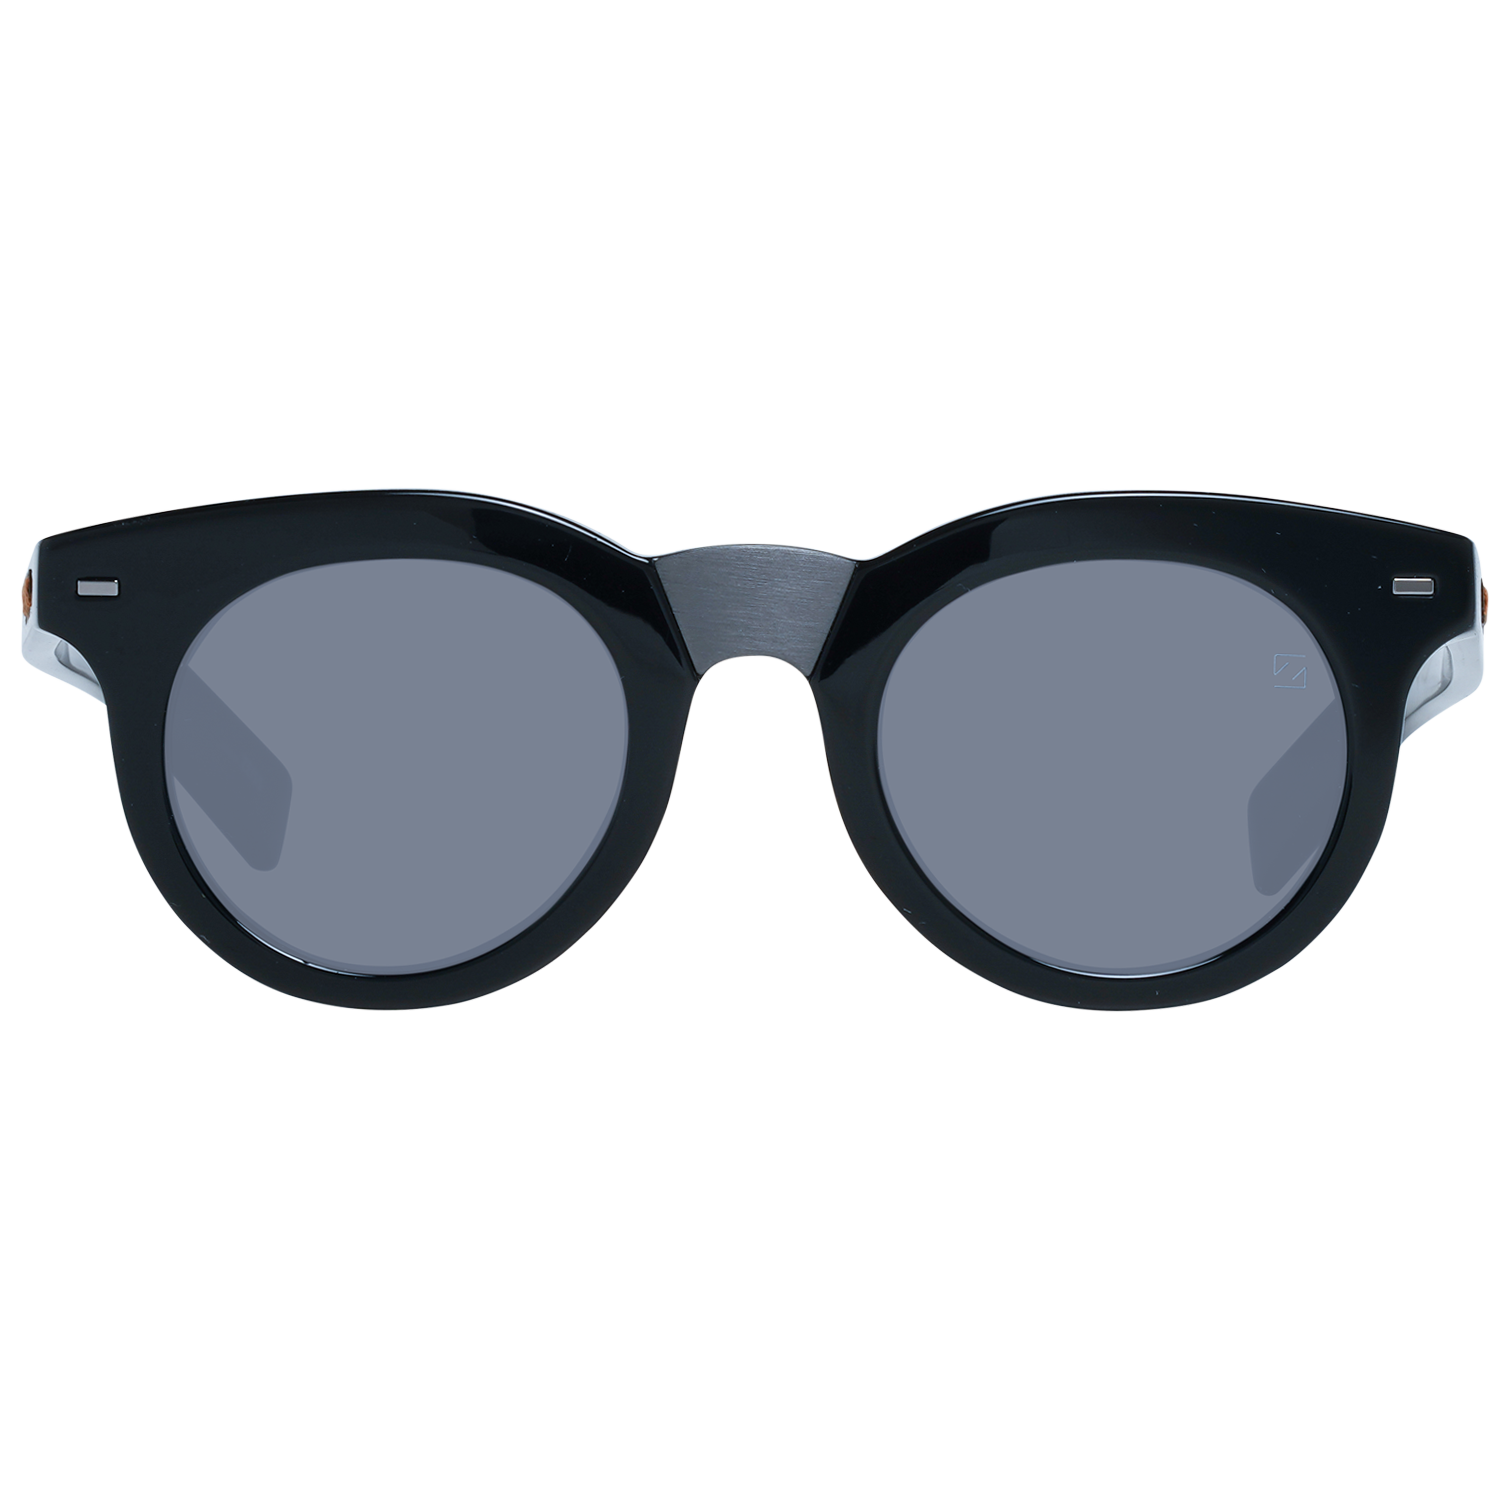 Zegna Couture Sunglasses Zegna Couture Sunglasses ZC0010 47 01A Eyeglasses Eyewear UK USA Australia 